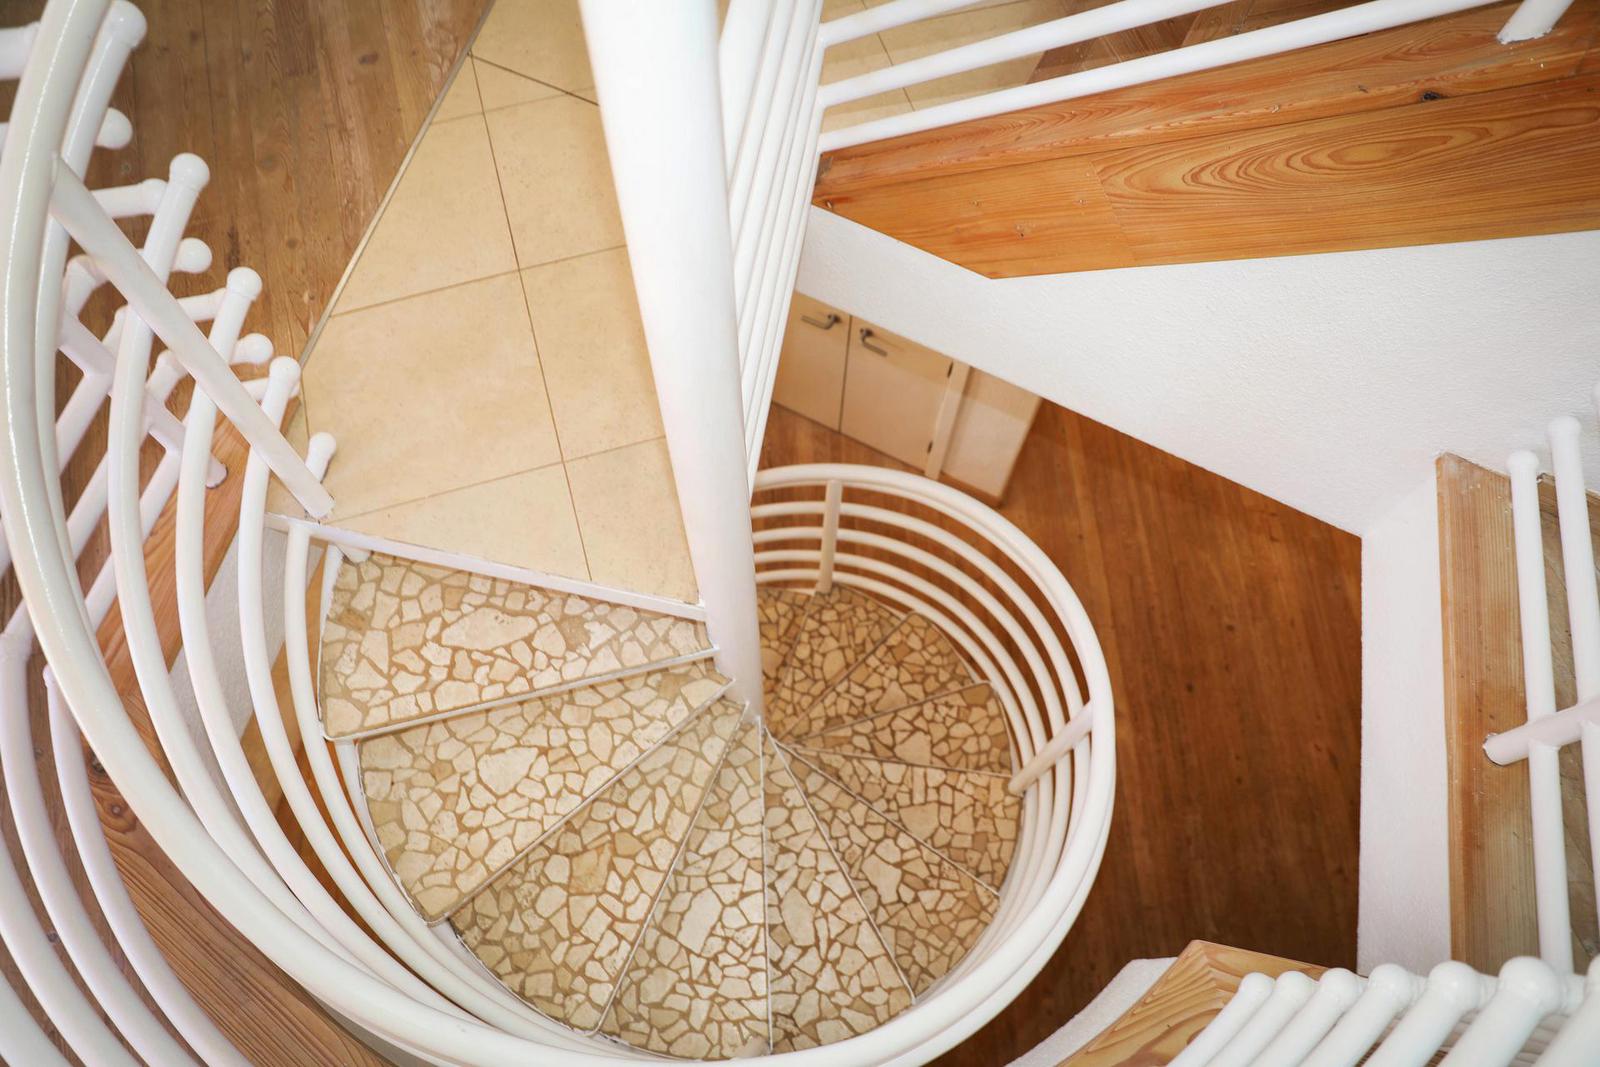 Spiral Staircase.